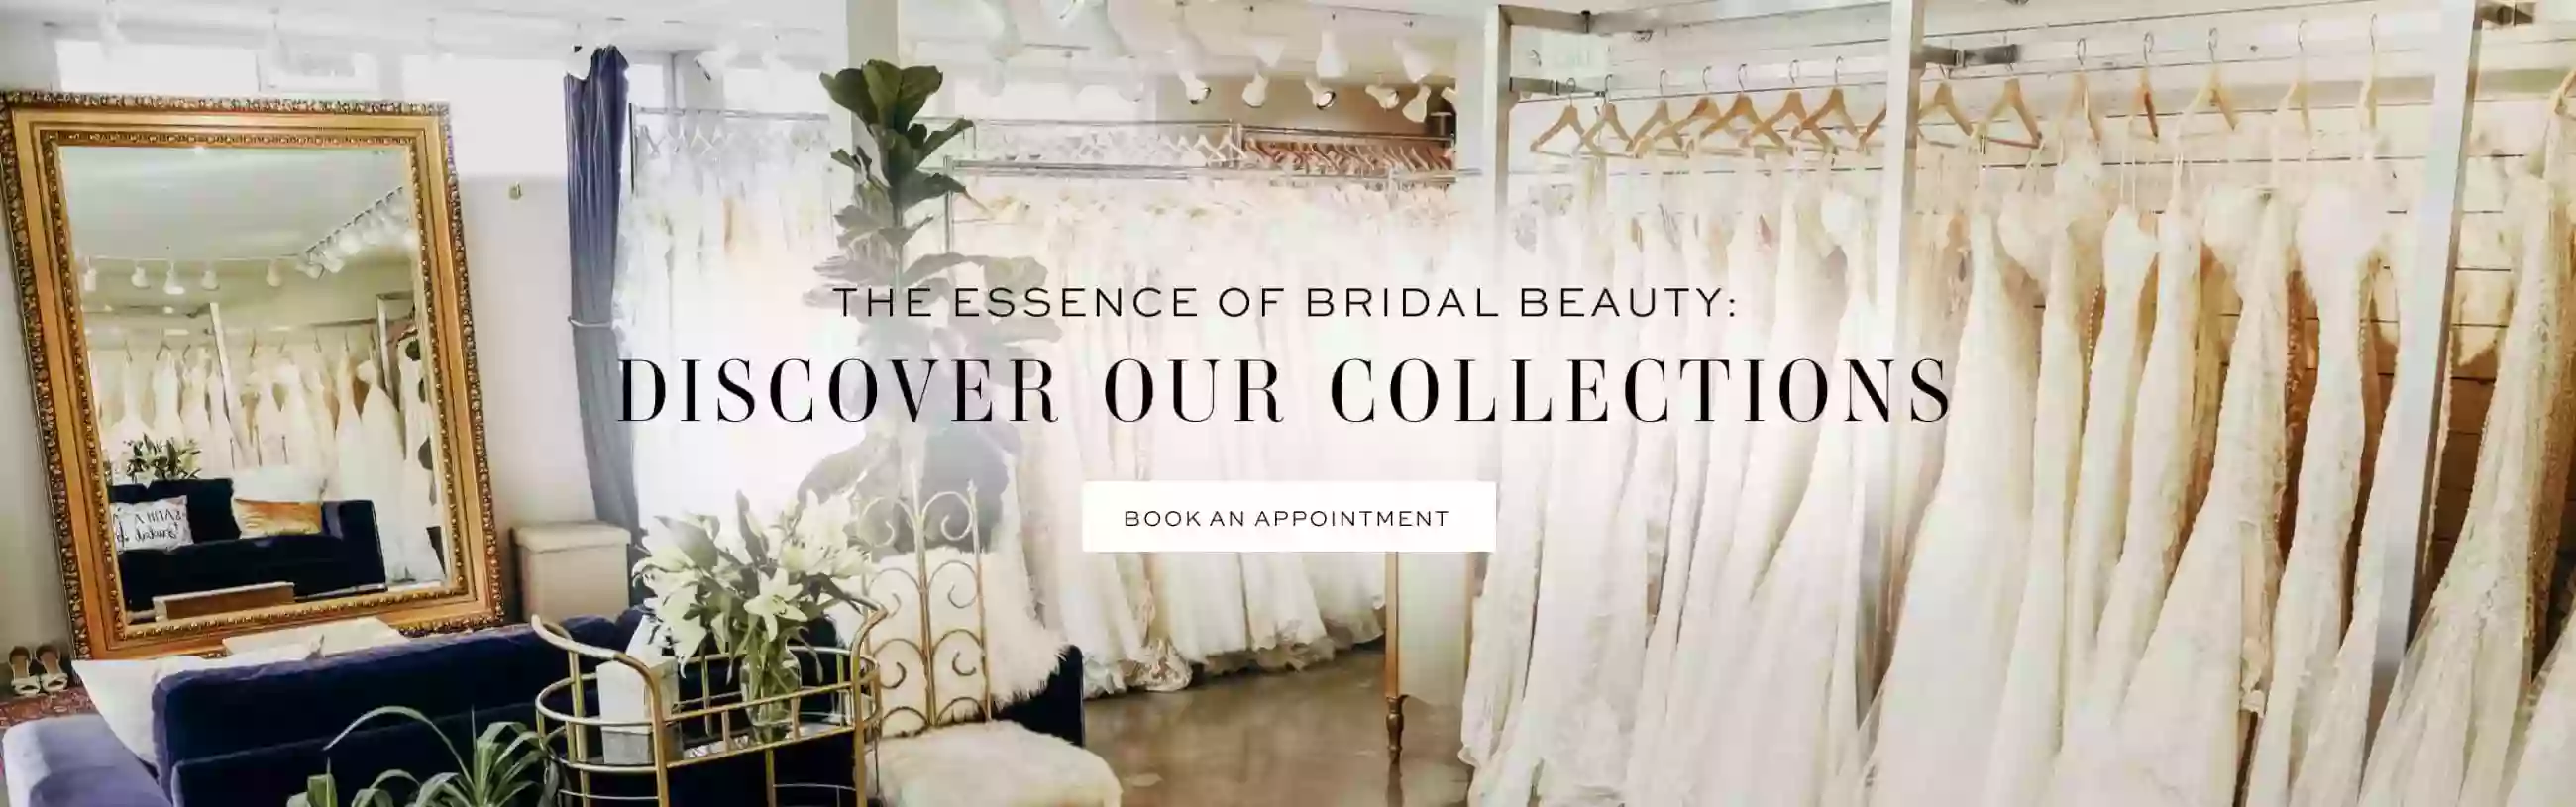 Samila Bridal and Formal - Seattle Bridal Shop